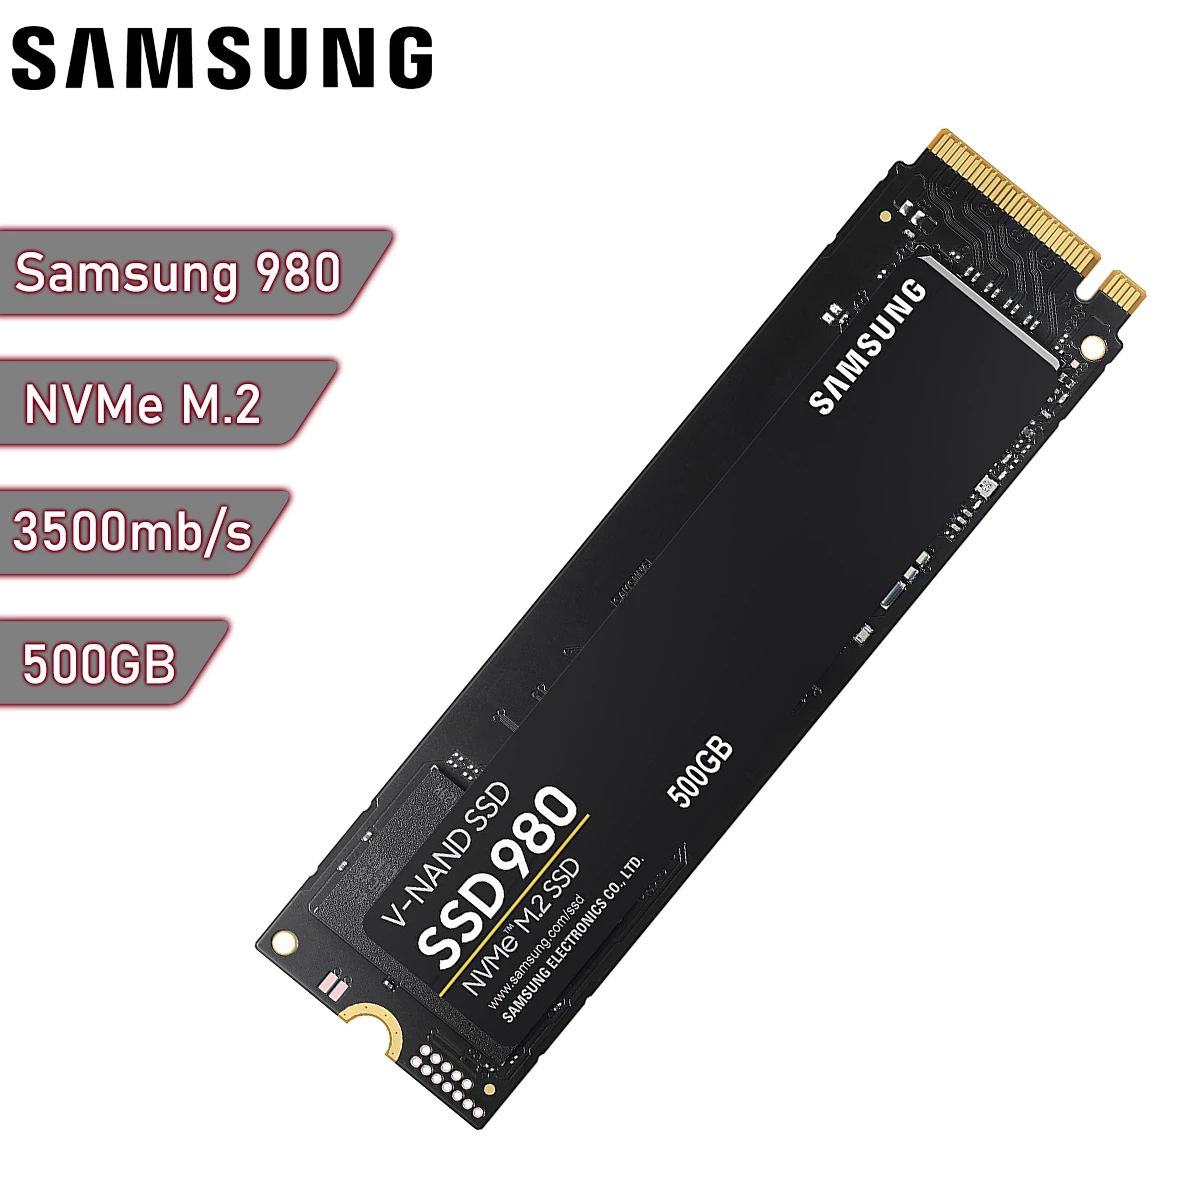 preferible Sudor vino Disco sólido SSD M.2 NVMe 500Gb Samsung 980 500Gb | Quito Ecuador